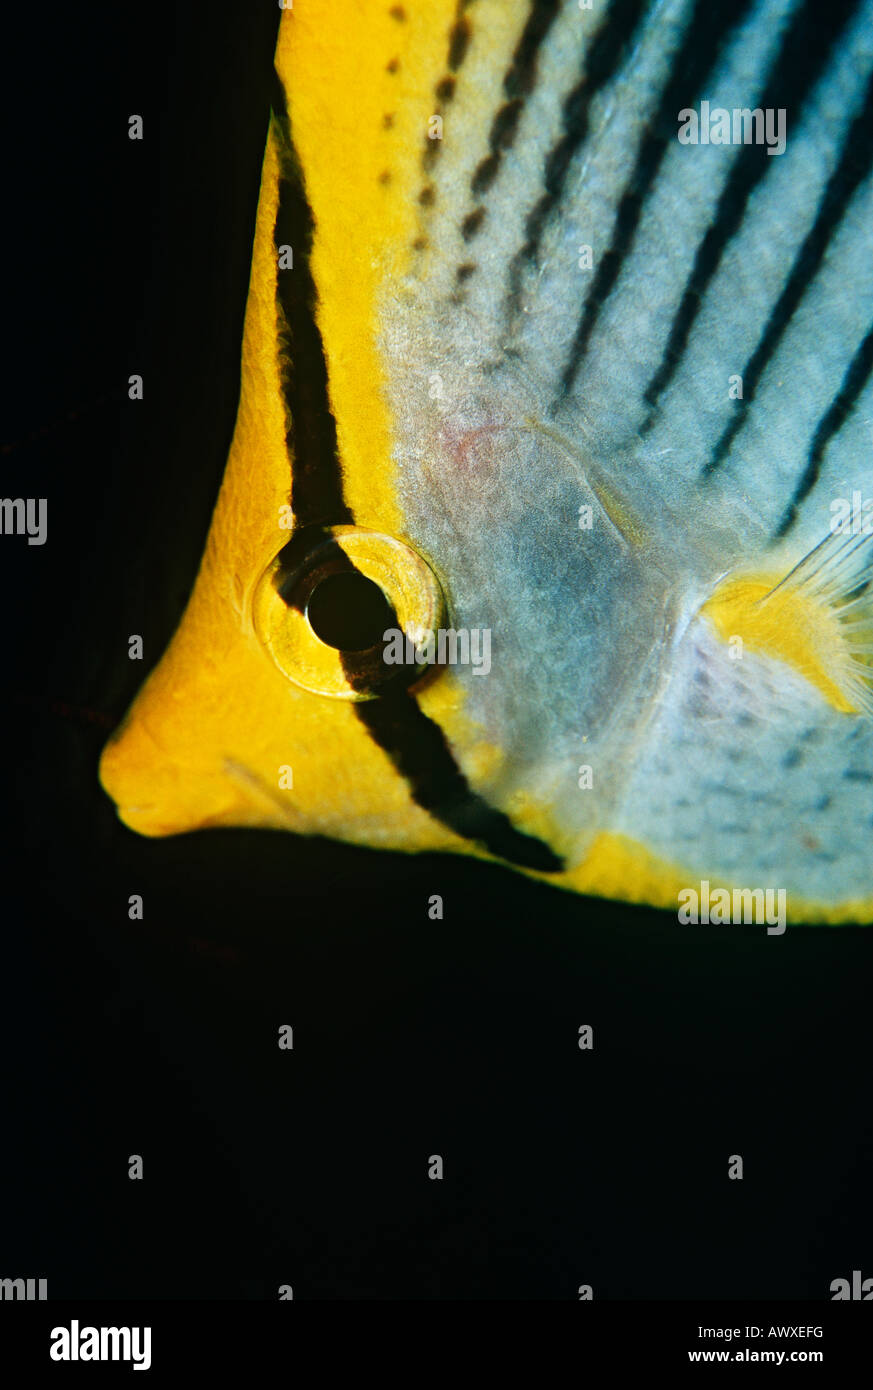 Raja Ampat, Indonesia, Pacific Ocean, spot-tail butterflyfish (Chaetodon ocellicaudus), close-up Stock Photo